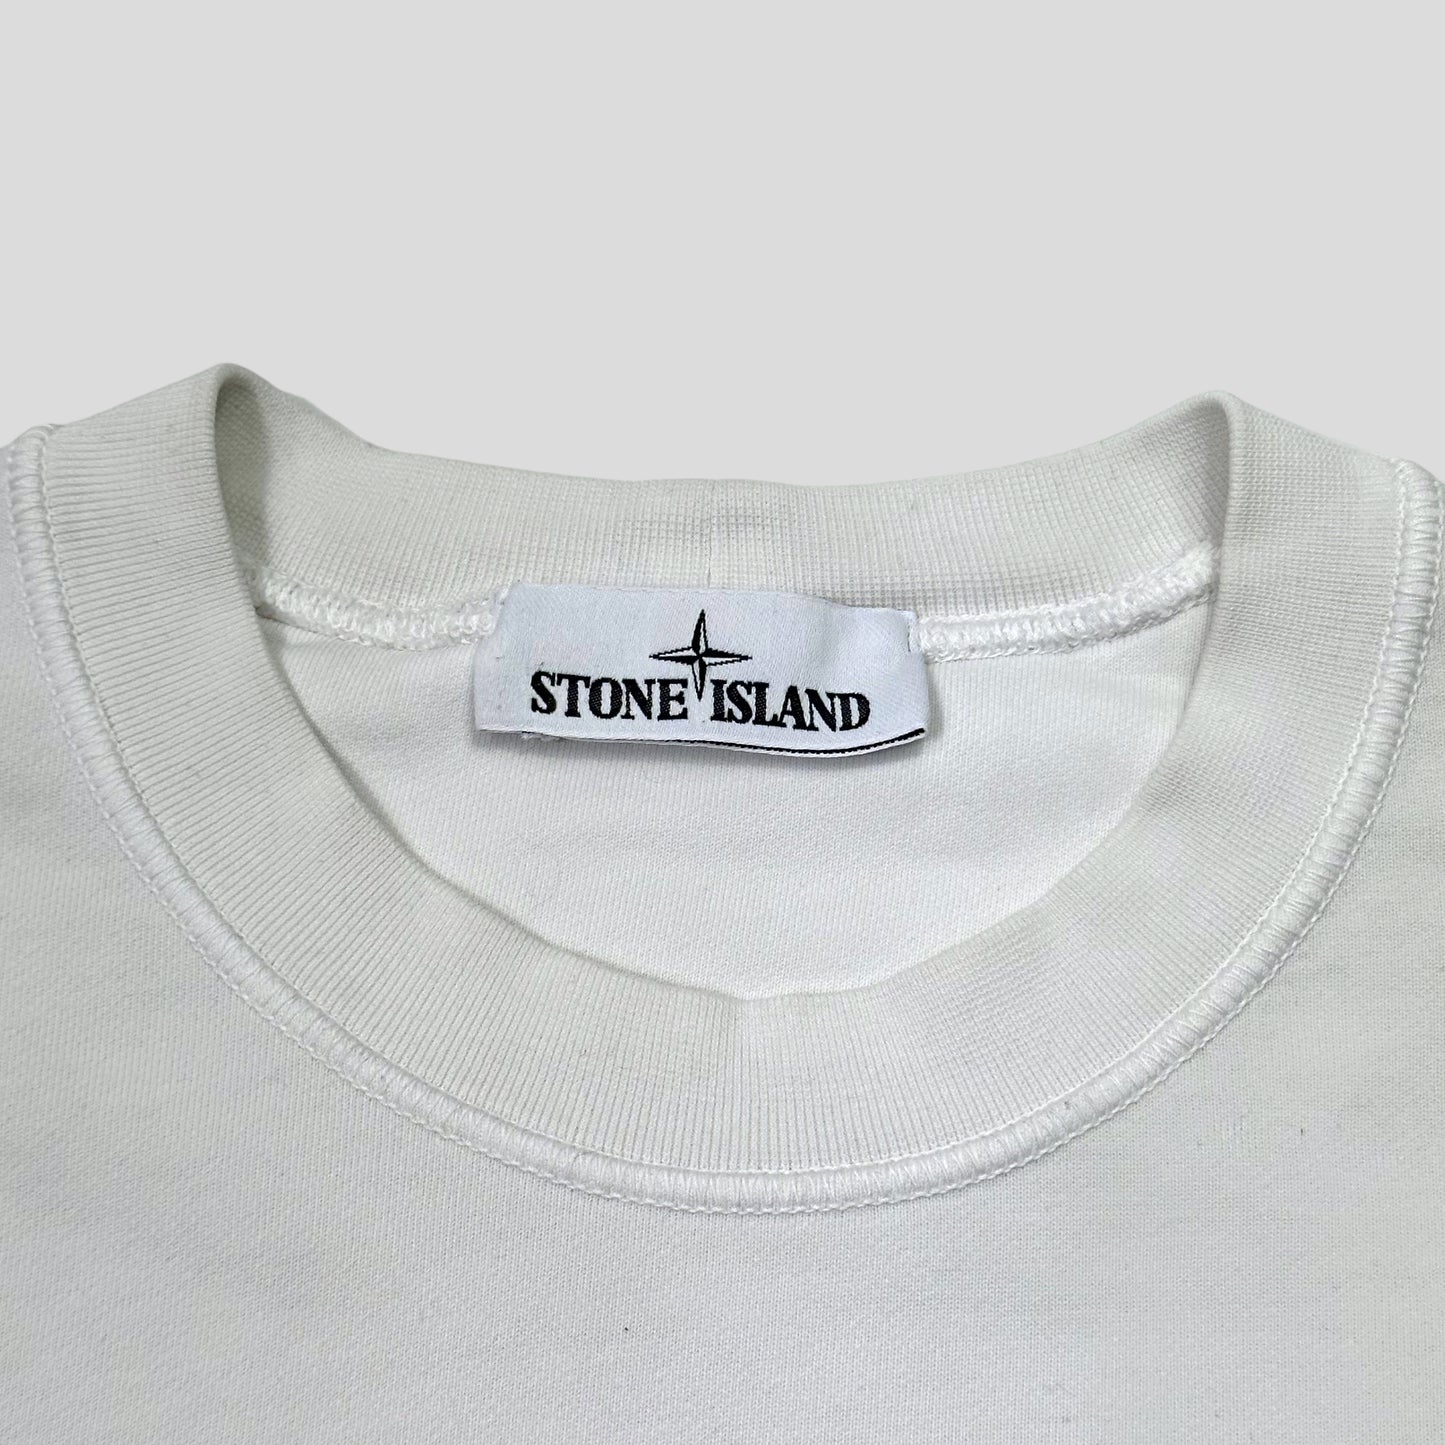 Stone Island White Crewneck - M/L